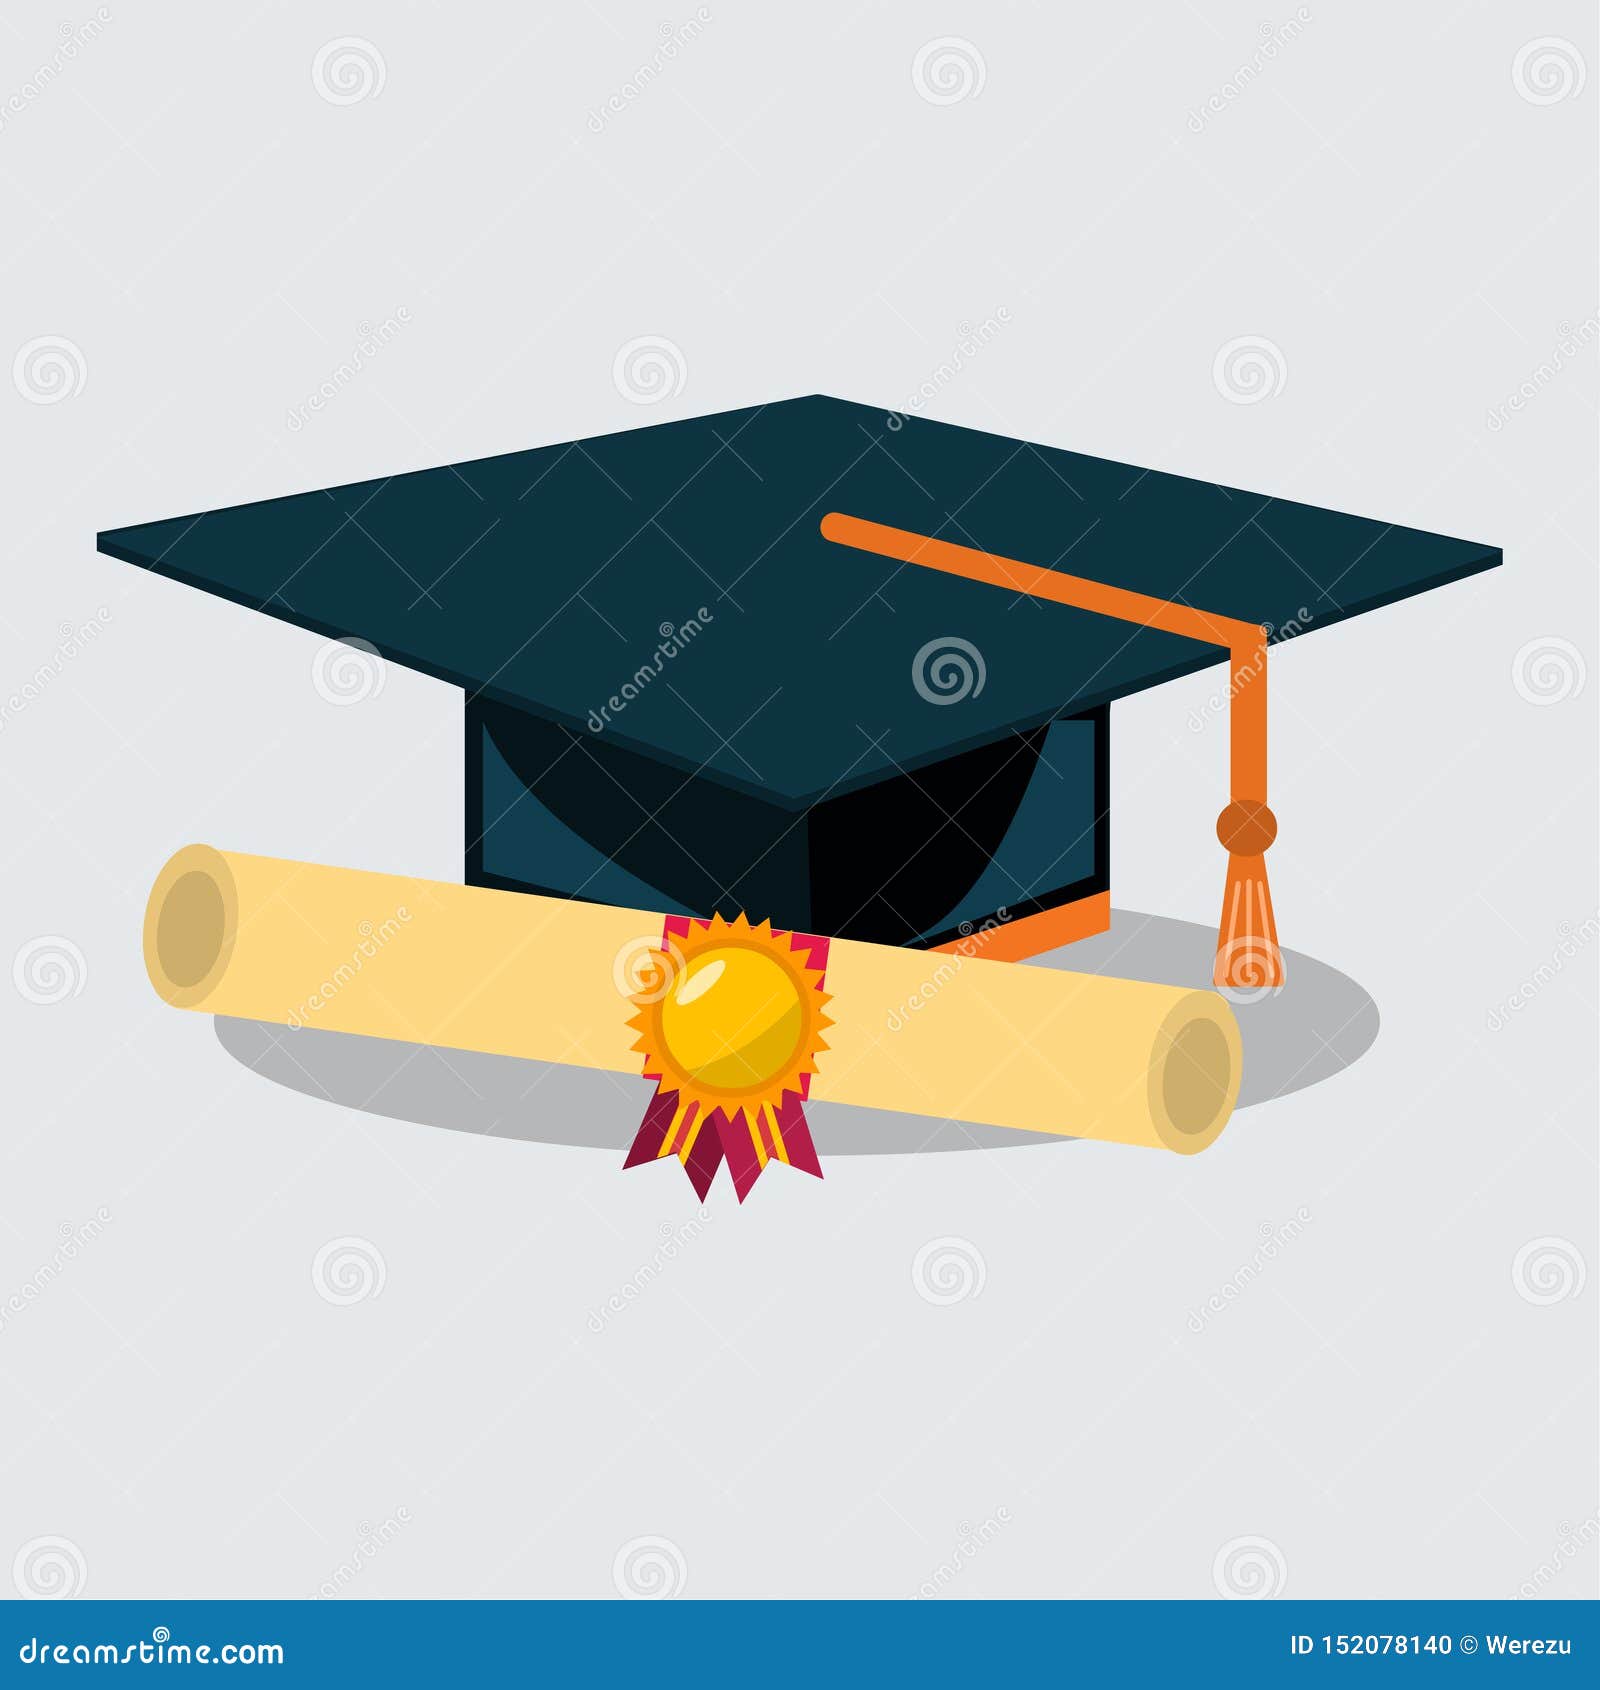 Graduation Cap and Diploma Certificate Vector Illustration Stock Vector ...